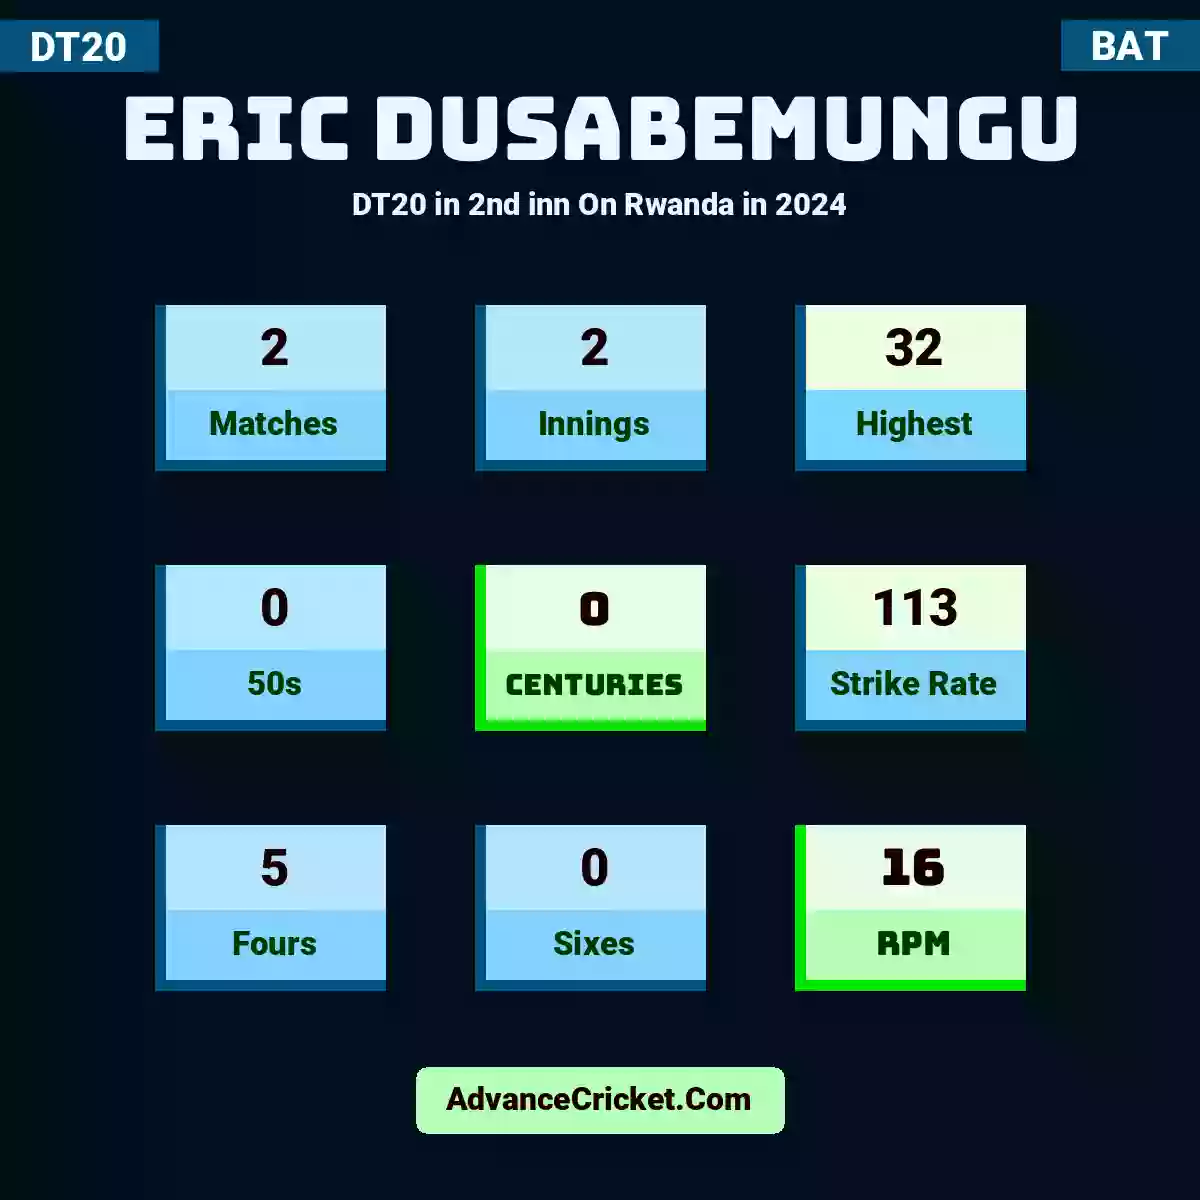 Eric Dusabemungu DT20  in 2nd inn On Rwanda in 2024, Eric Dusabemungu played 2 matches, scored 32 runs as highest, 0 half-centuries, and 0 centuries, with a strike rate of 113. E.Dusabemungu hit 5 fours and 0 sixes, with an RPM of 16.